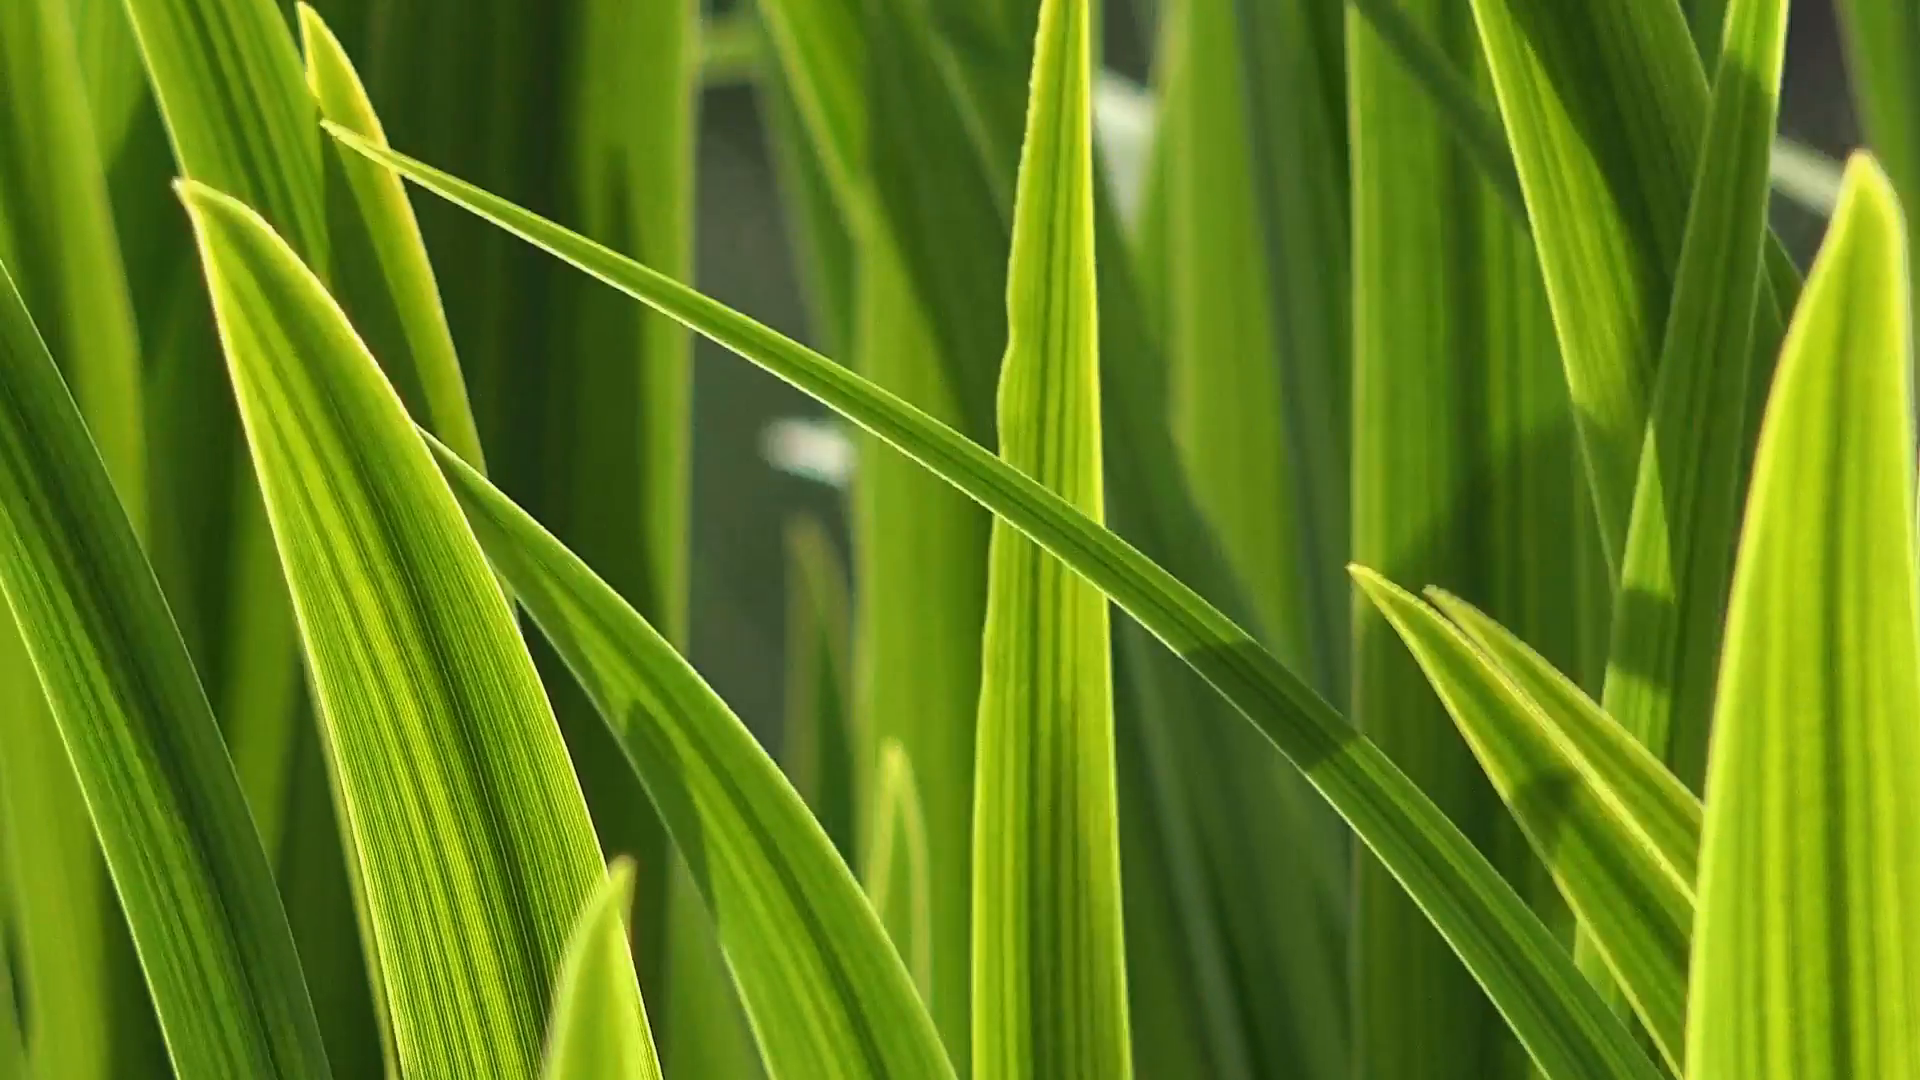 Green Grass Blades Macro Close up, Sunlight shines Through Stock ...